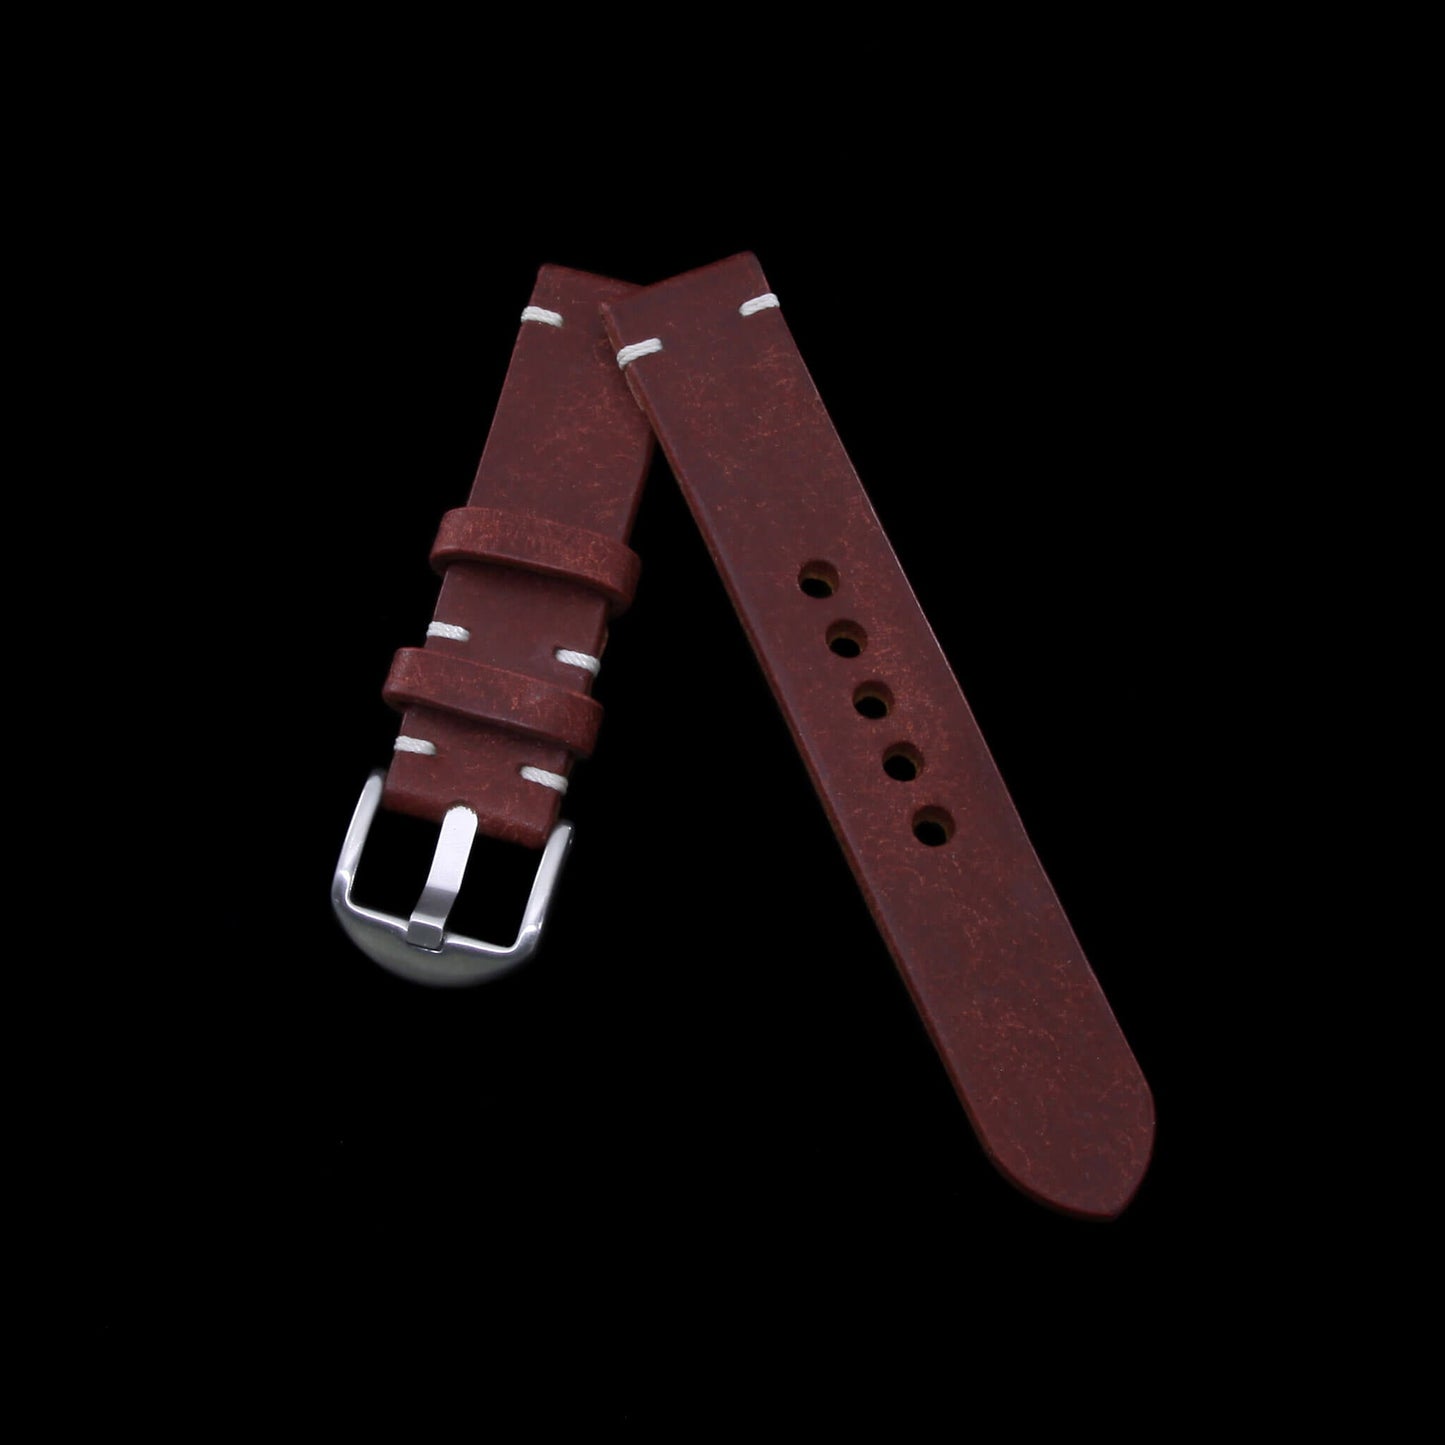 Minimalist Leather Apple Watch Strap in Pueblo Cocinella Italian Veg-Tanned Leather